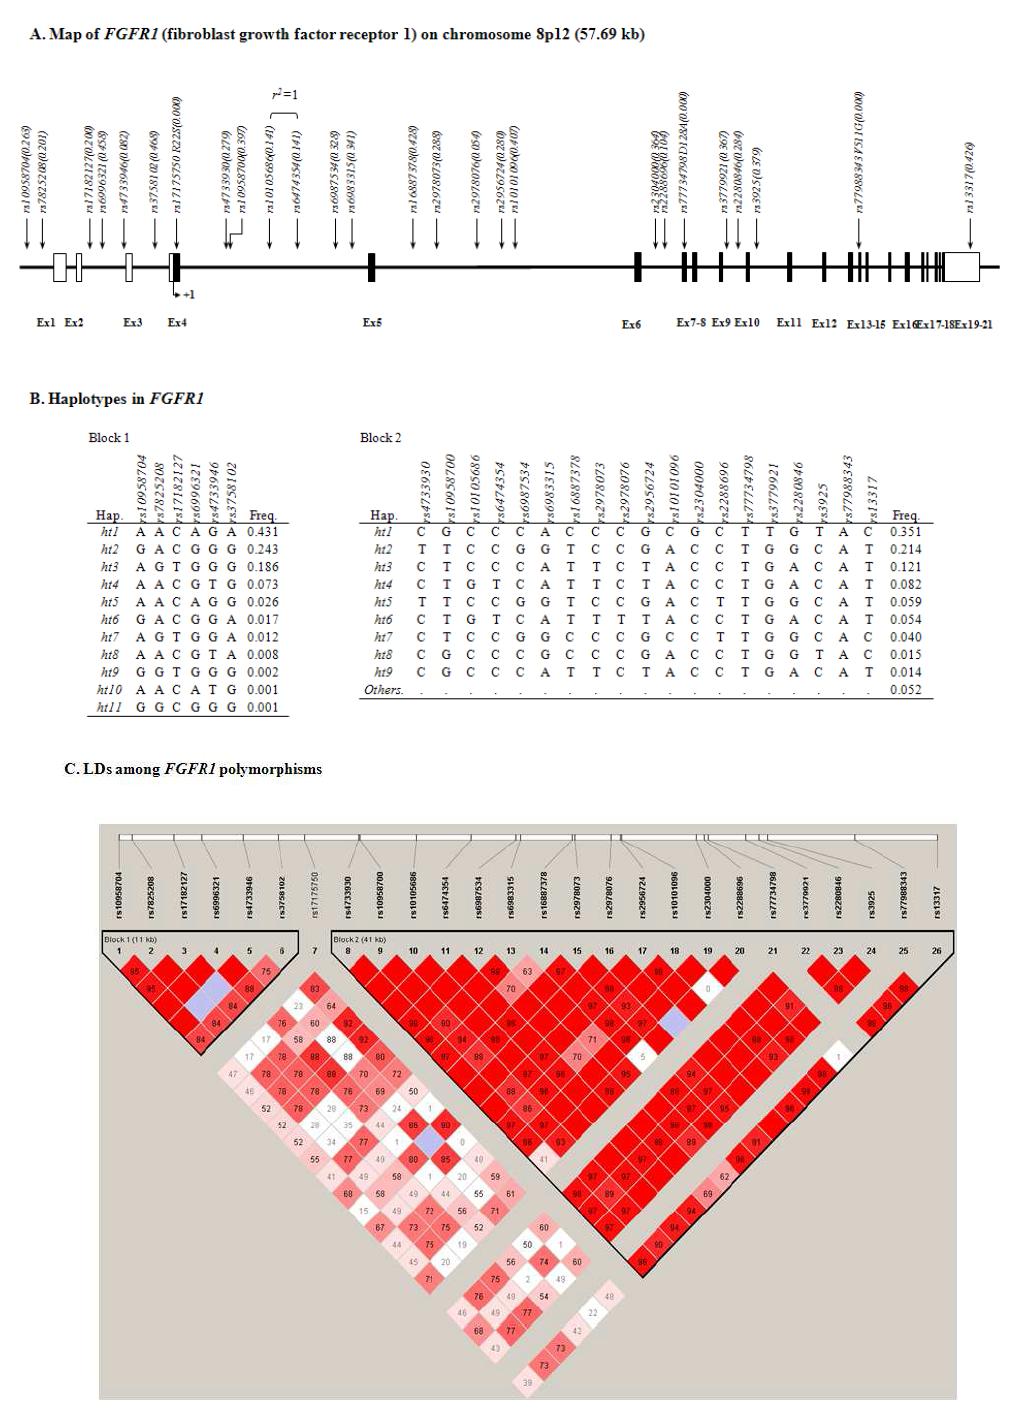 Map of FGFR1, Haplotypes in FGFR1, and LDs among FGFR1 polymorphims